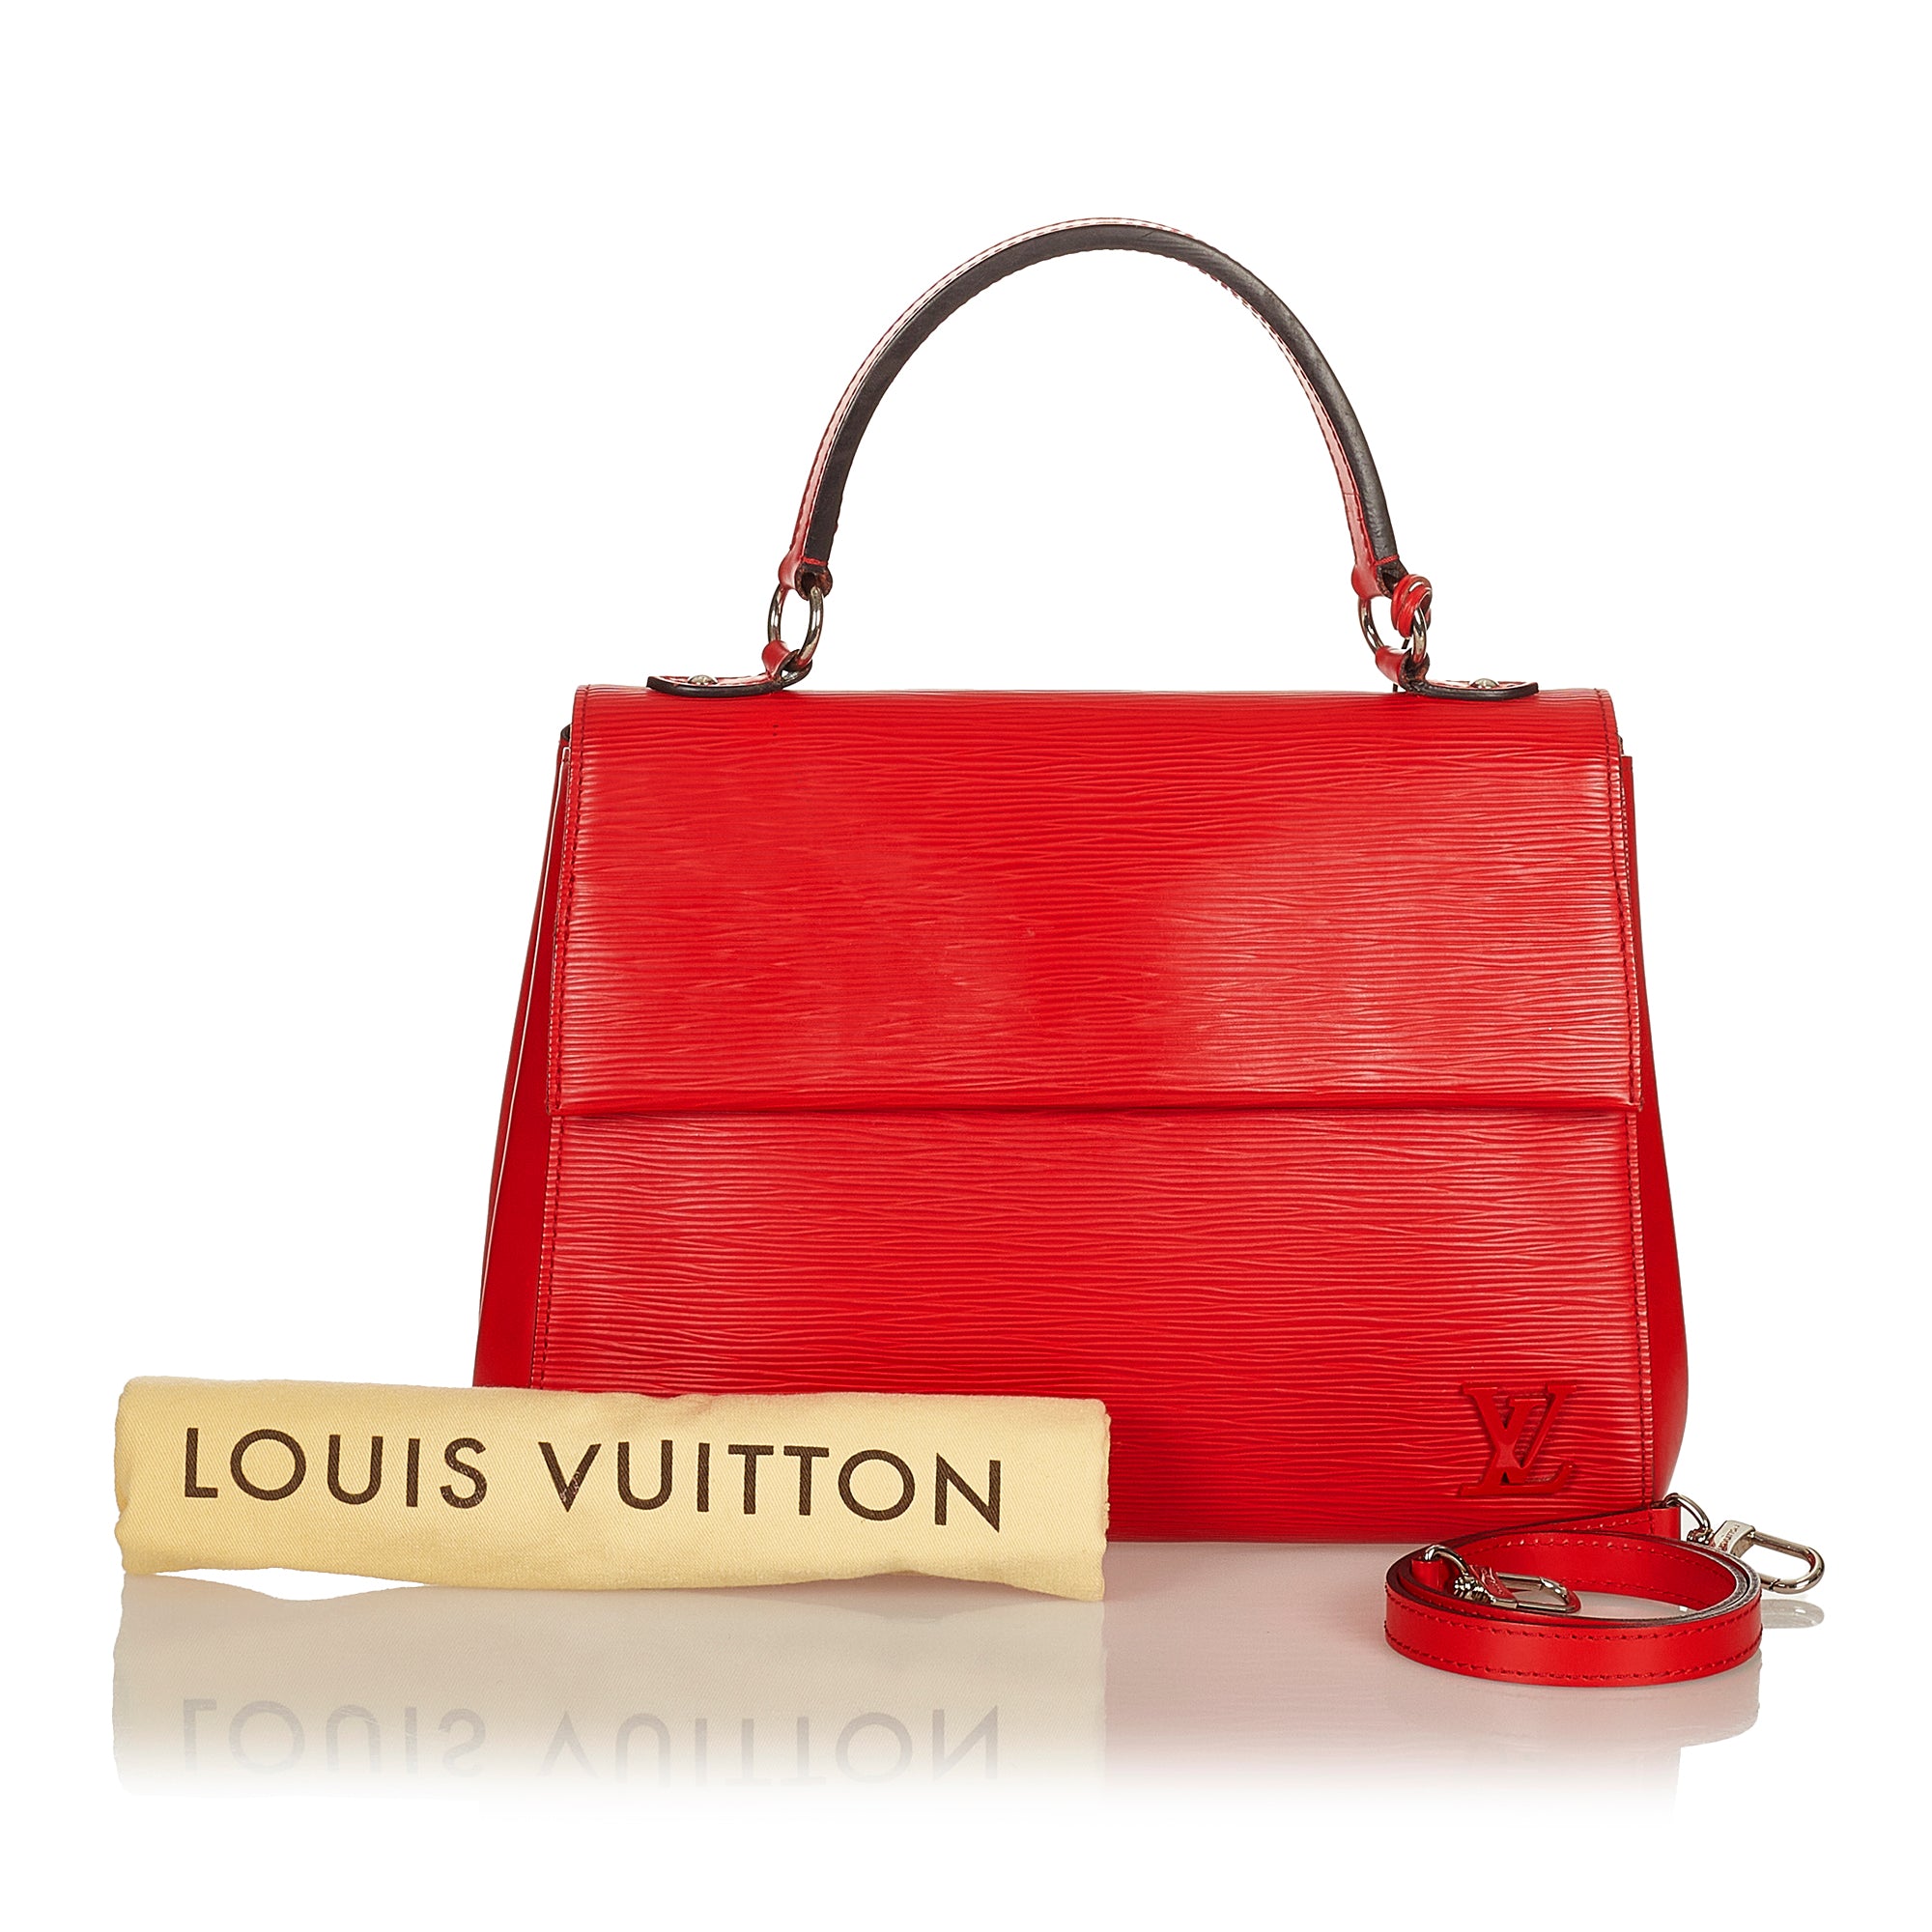 Louis Vuitton Cluny BB: First Impressions & Alma BB Comparison!